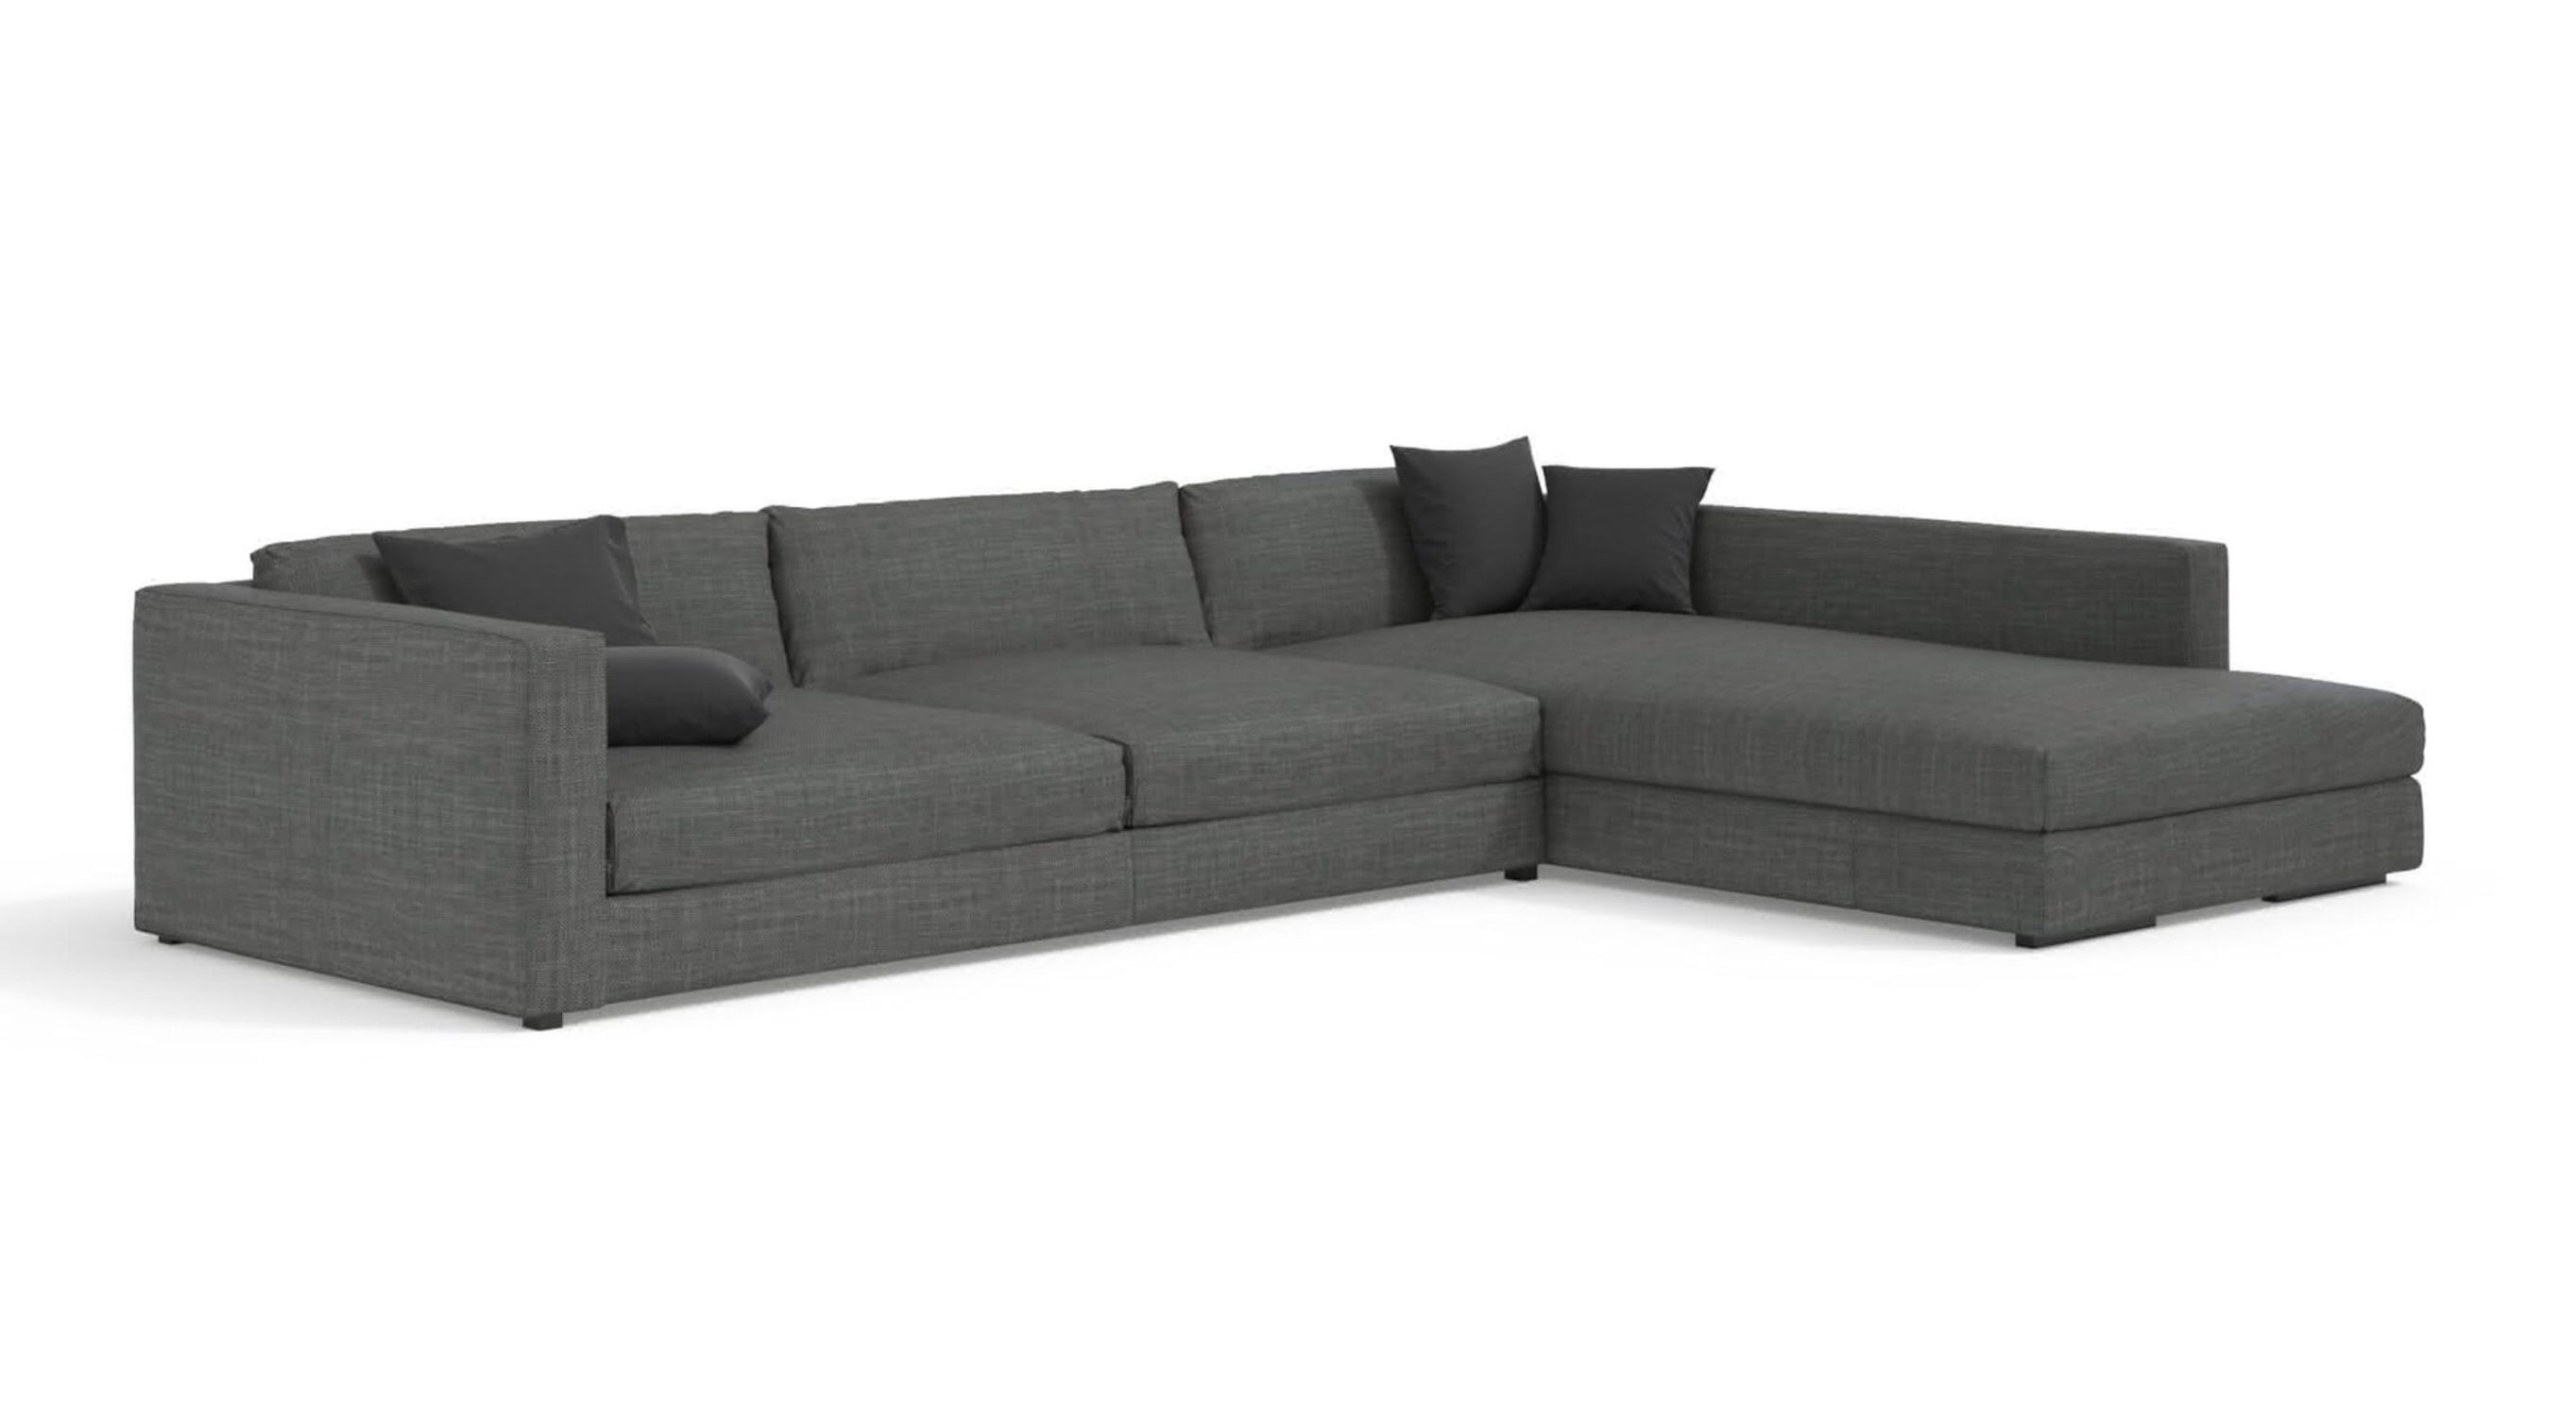 Made to Order Furniture. - Sofa 007-01